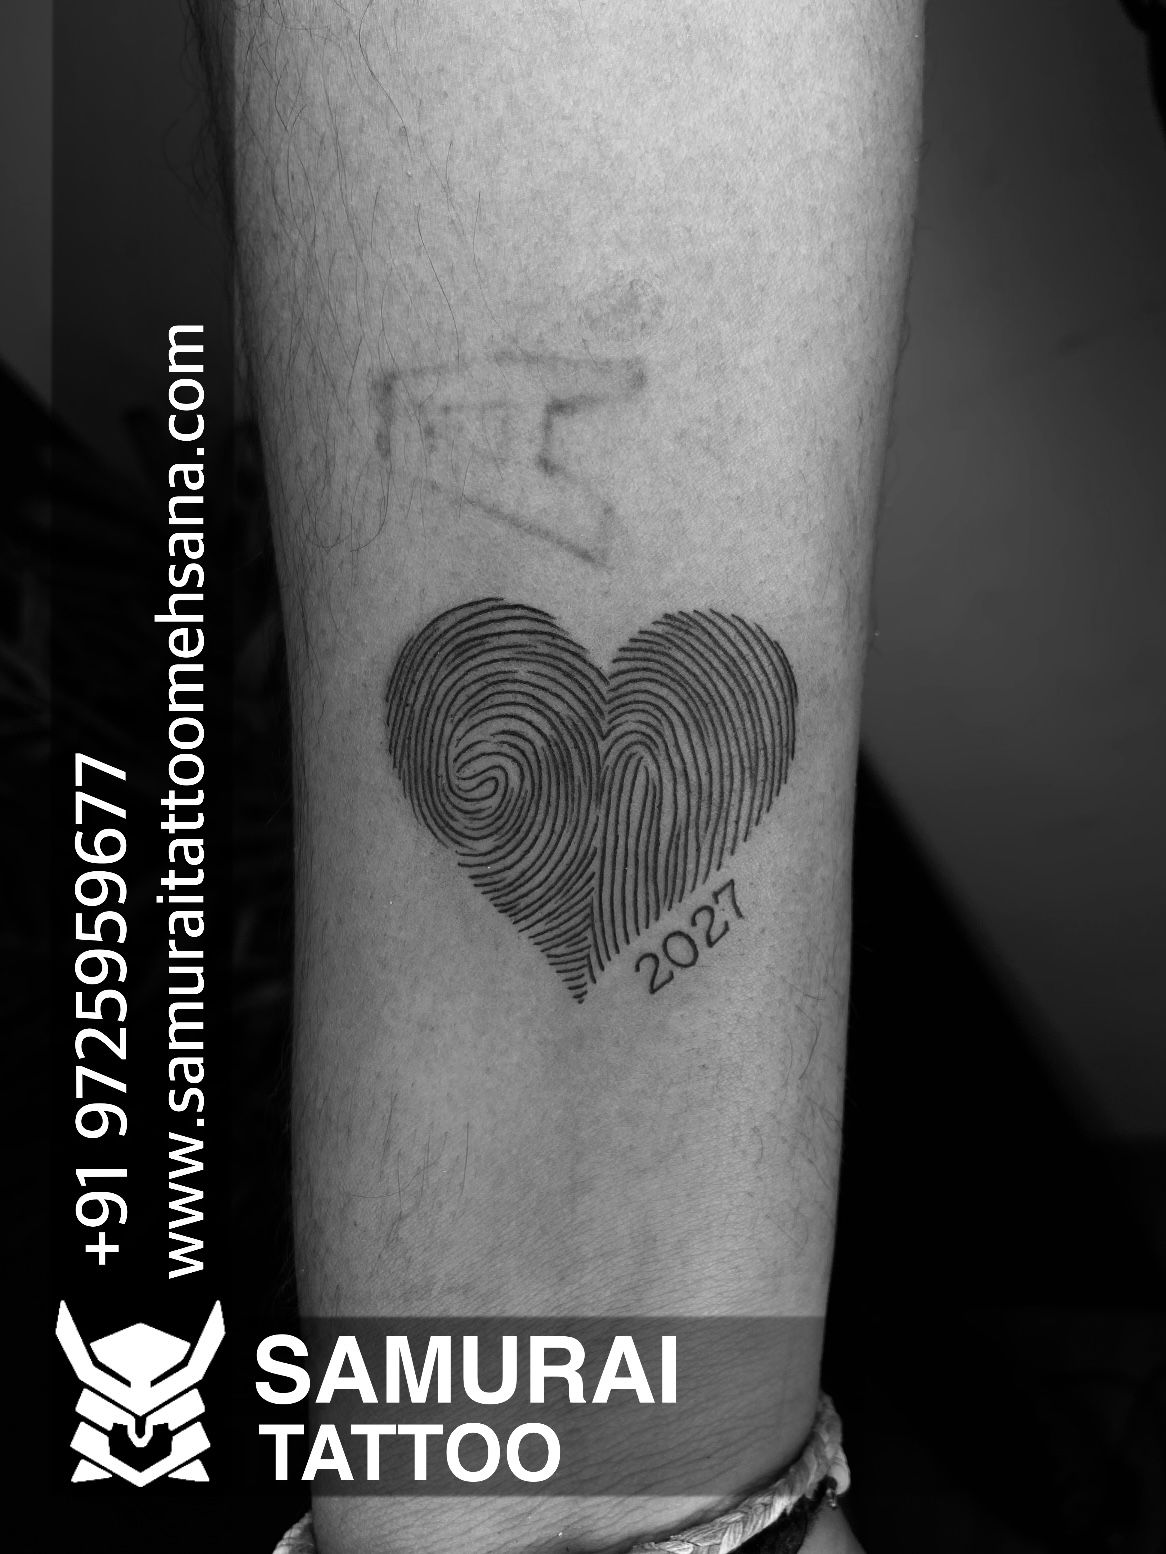 Tattoos I Love | Gallery posted by sarah.arnke | Lemon8